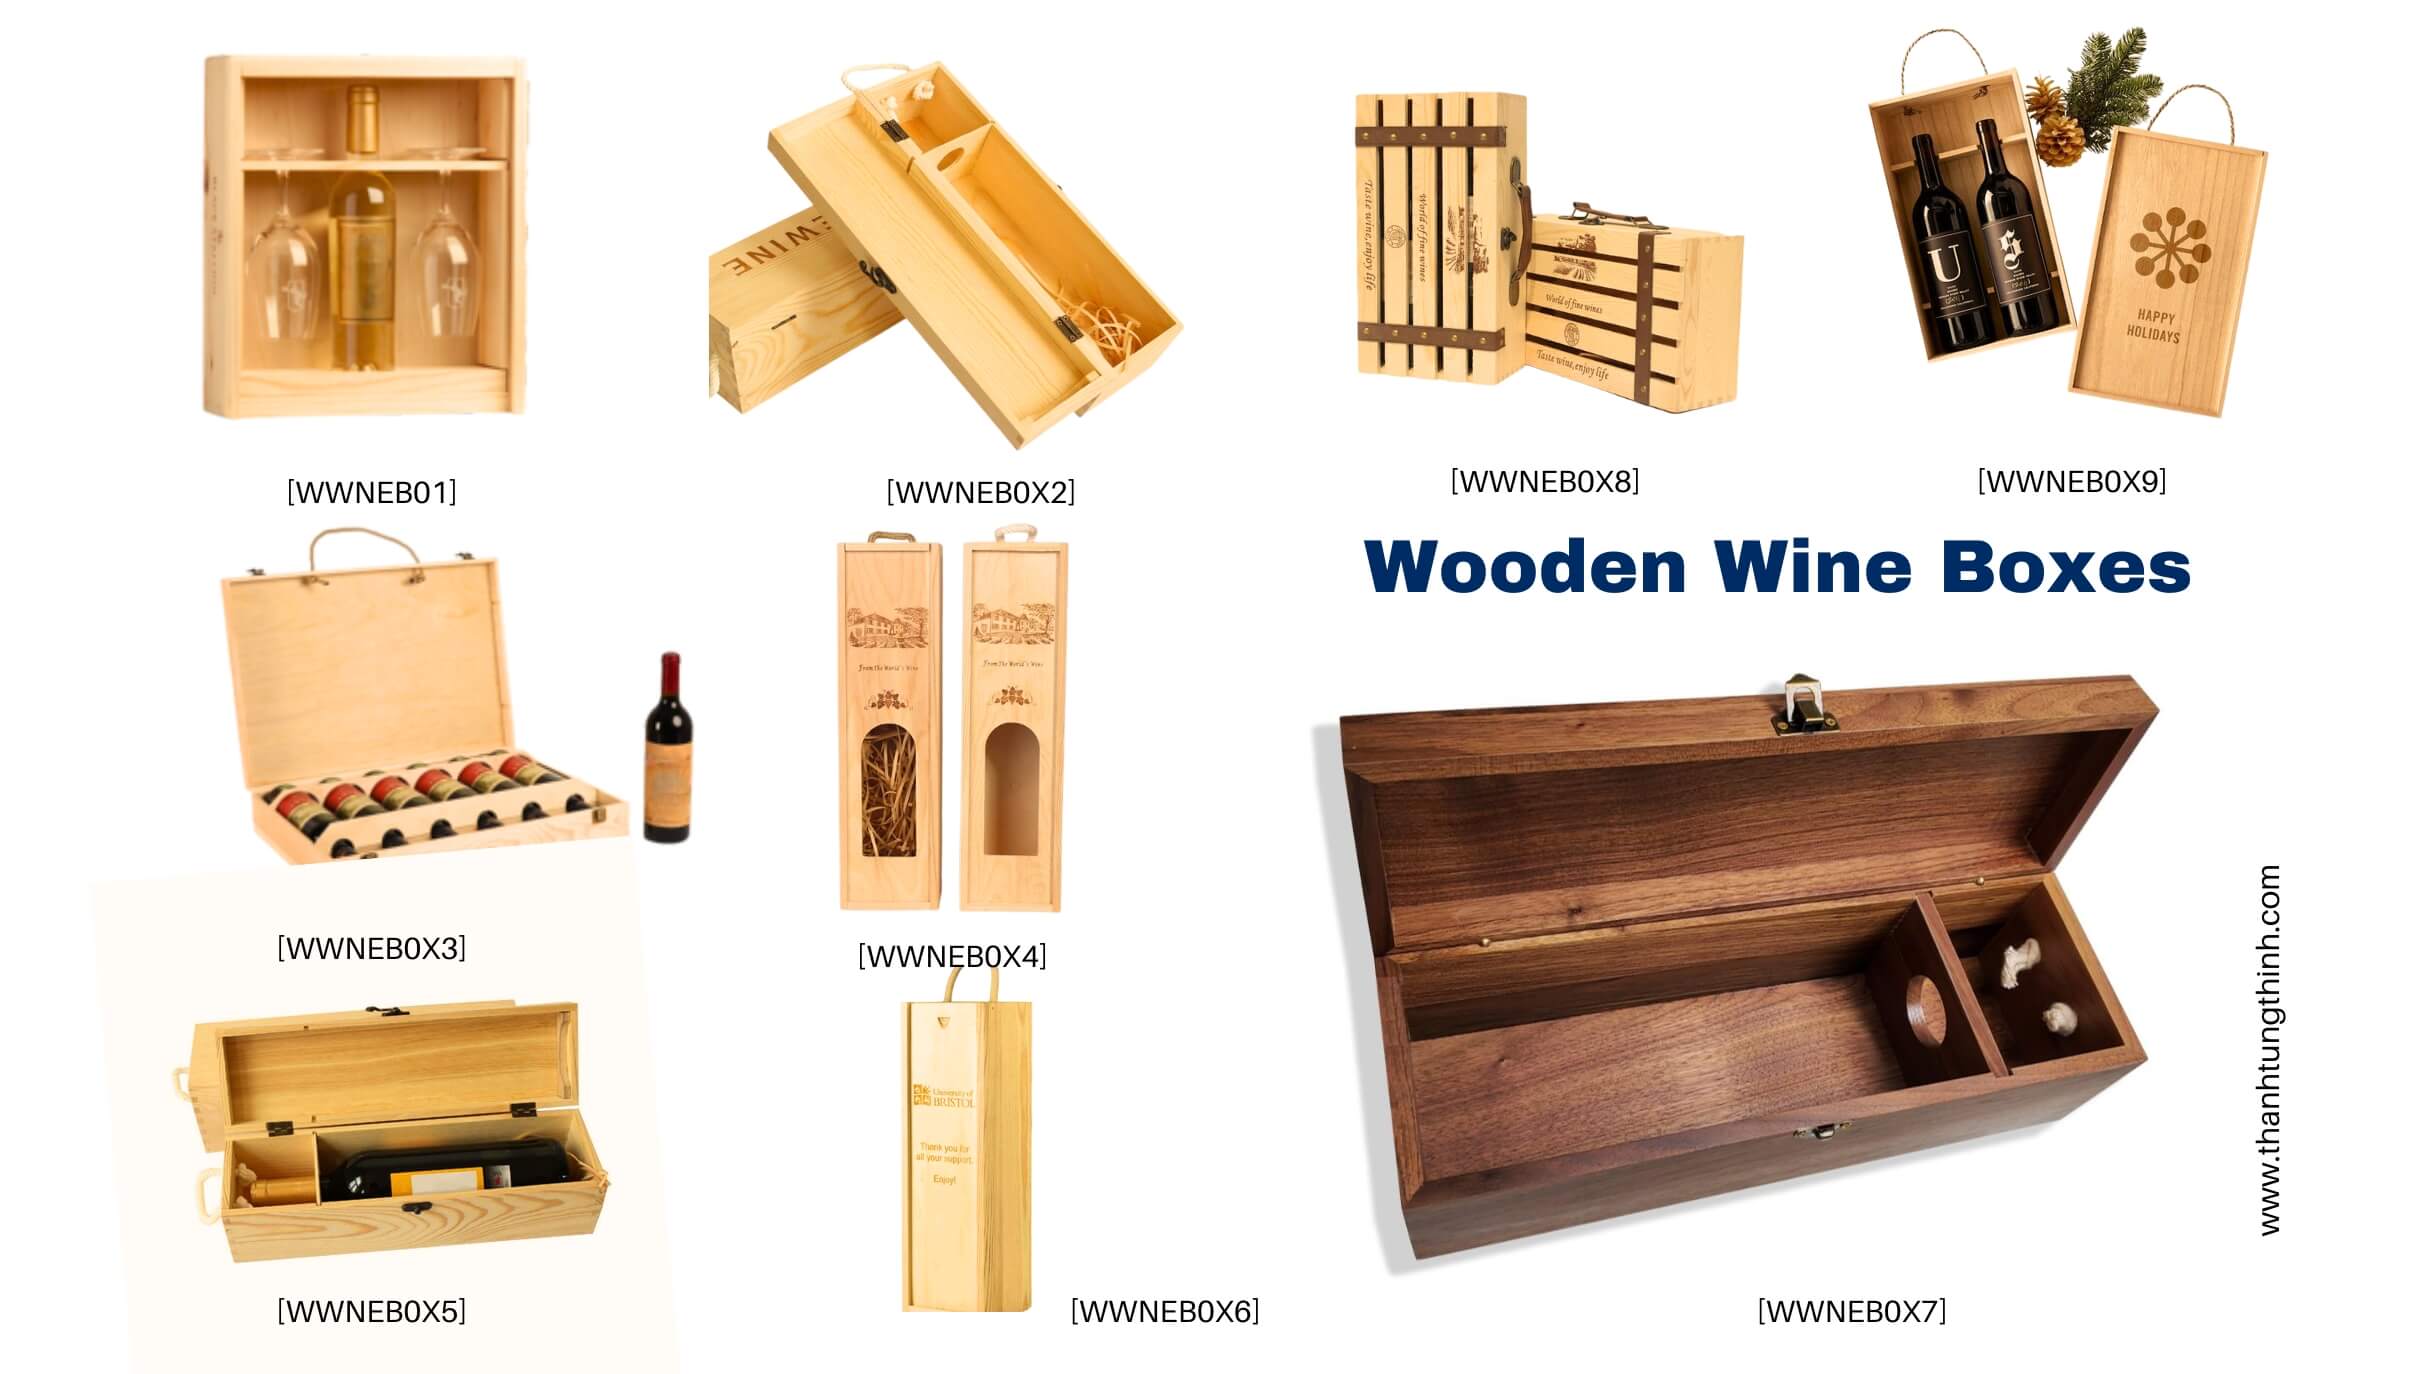 Wooden wine box manufacturer - wholesale wood wine box suppliers in Vietnam